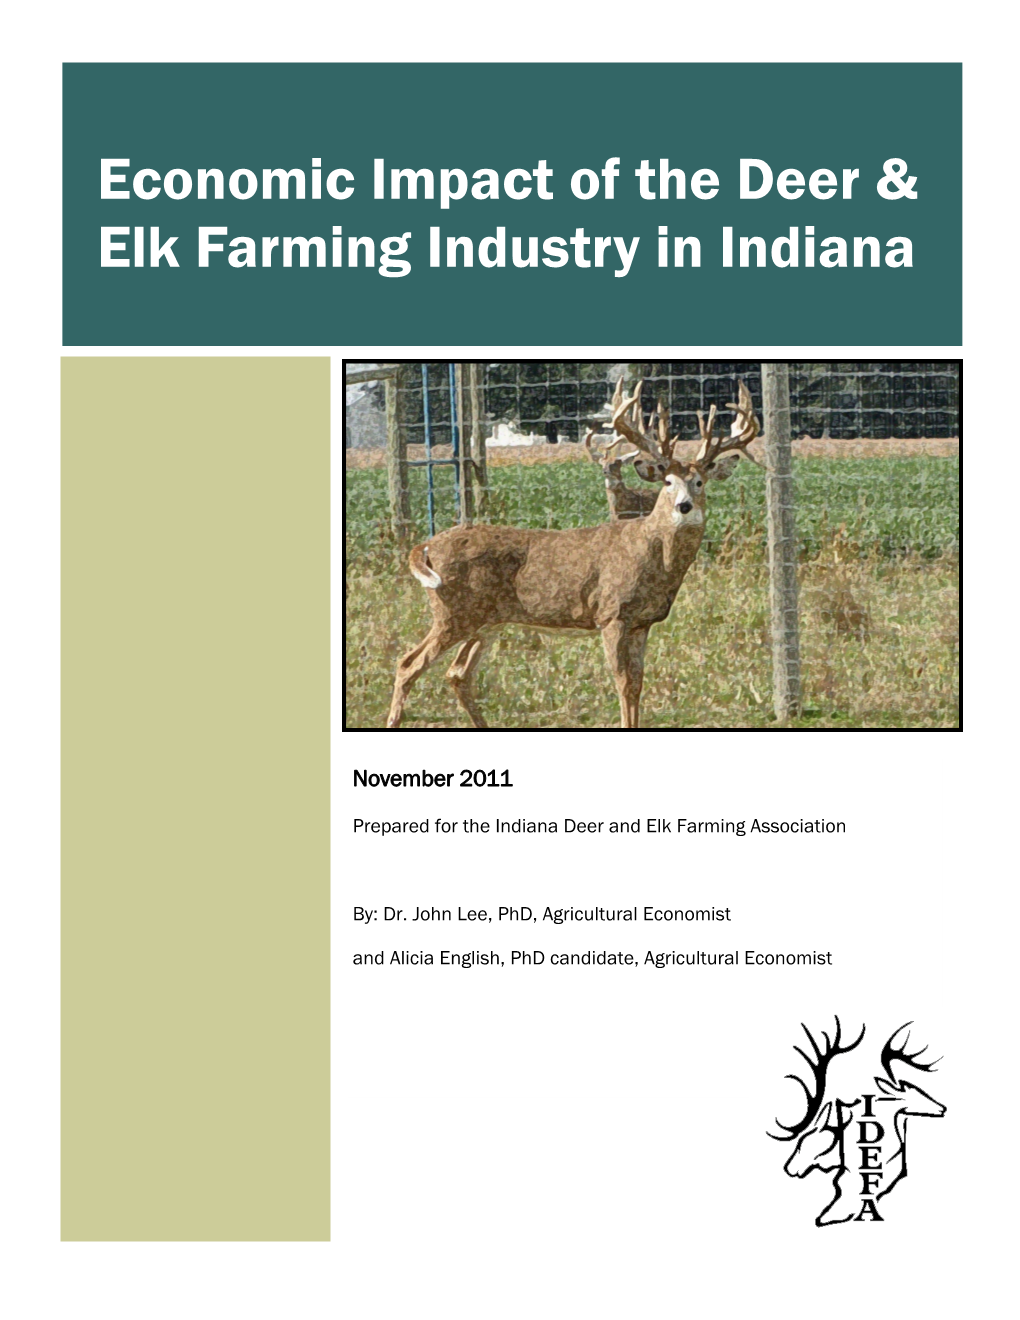 Economic Impact of the Deer & Elk Farming Industry in Indiana